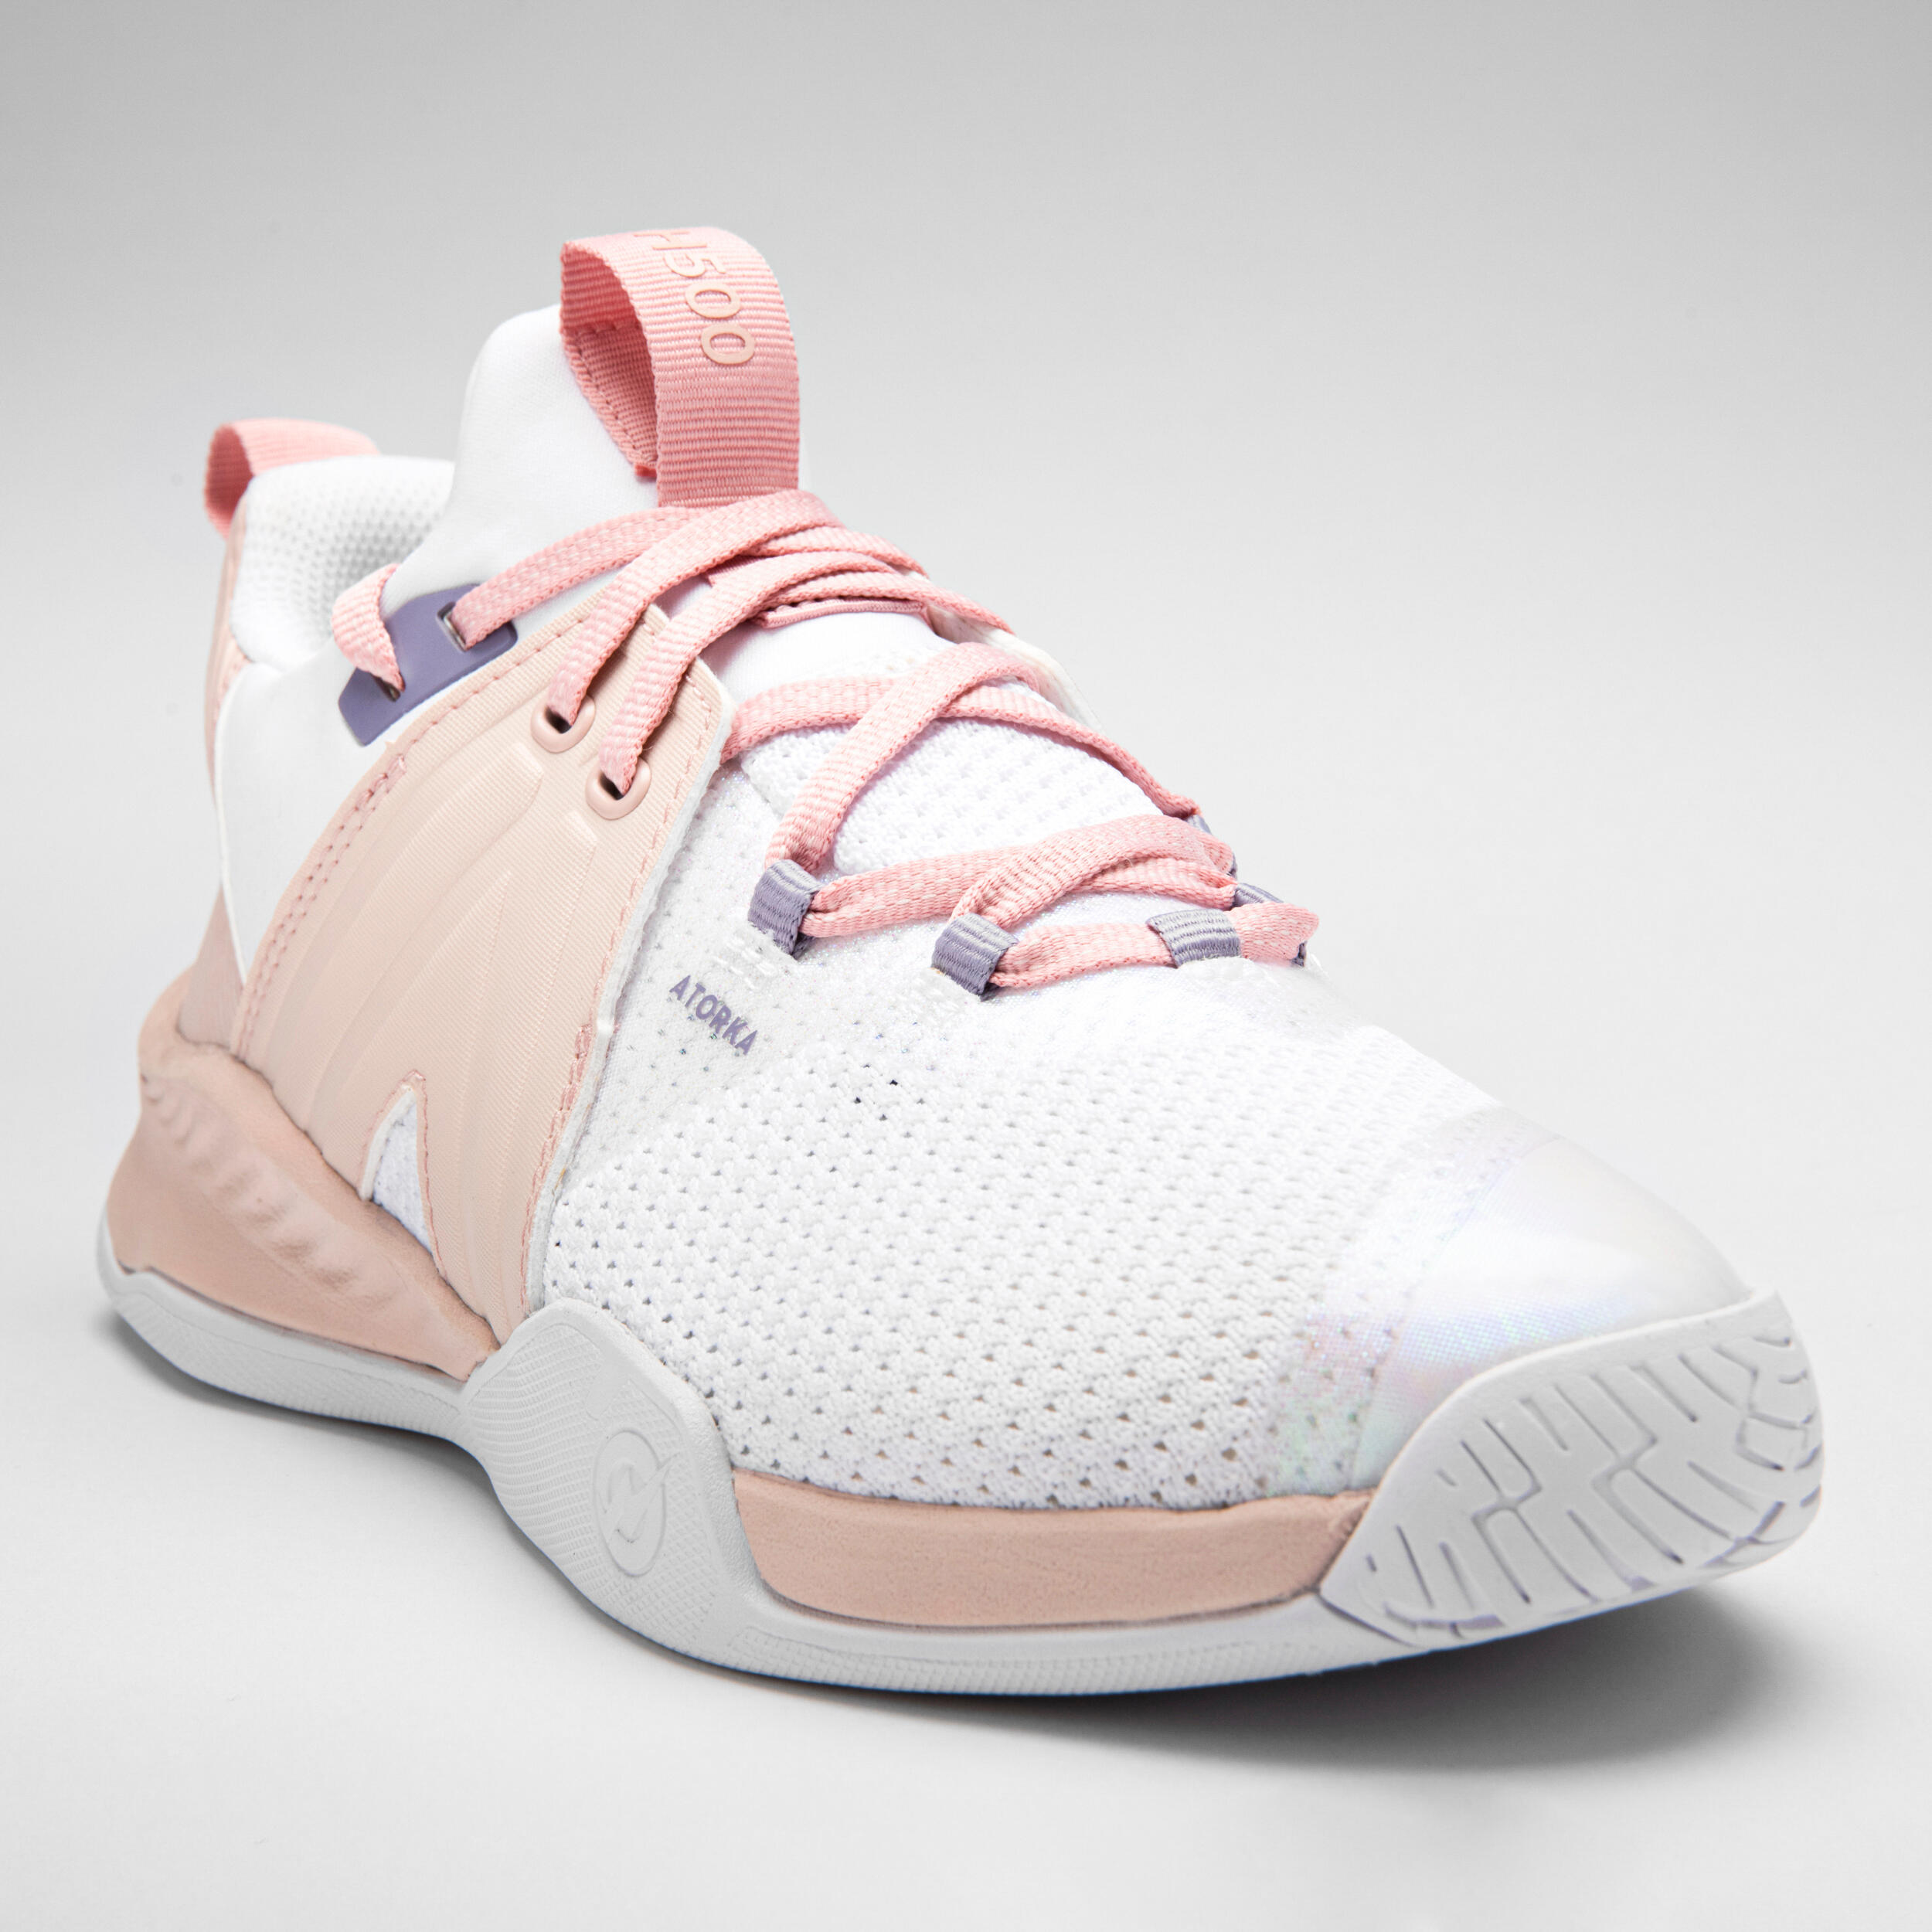 Men's/Women's Handball Shoes H500 Faster - Pink/White 7/17